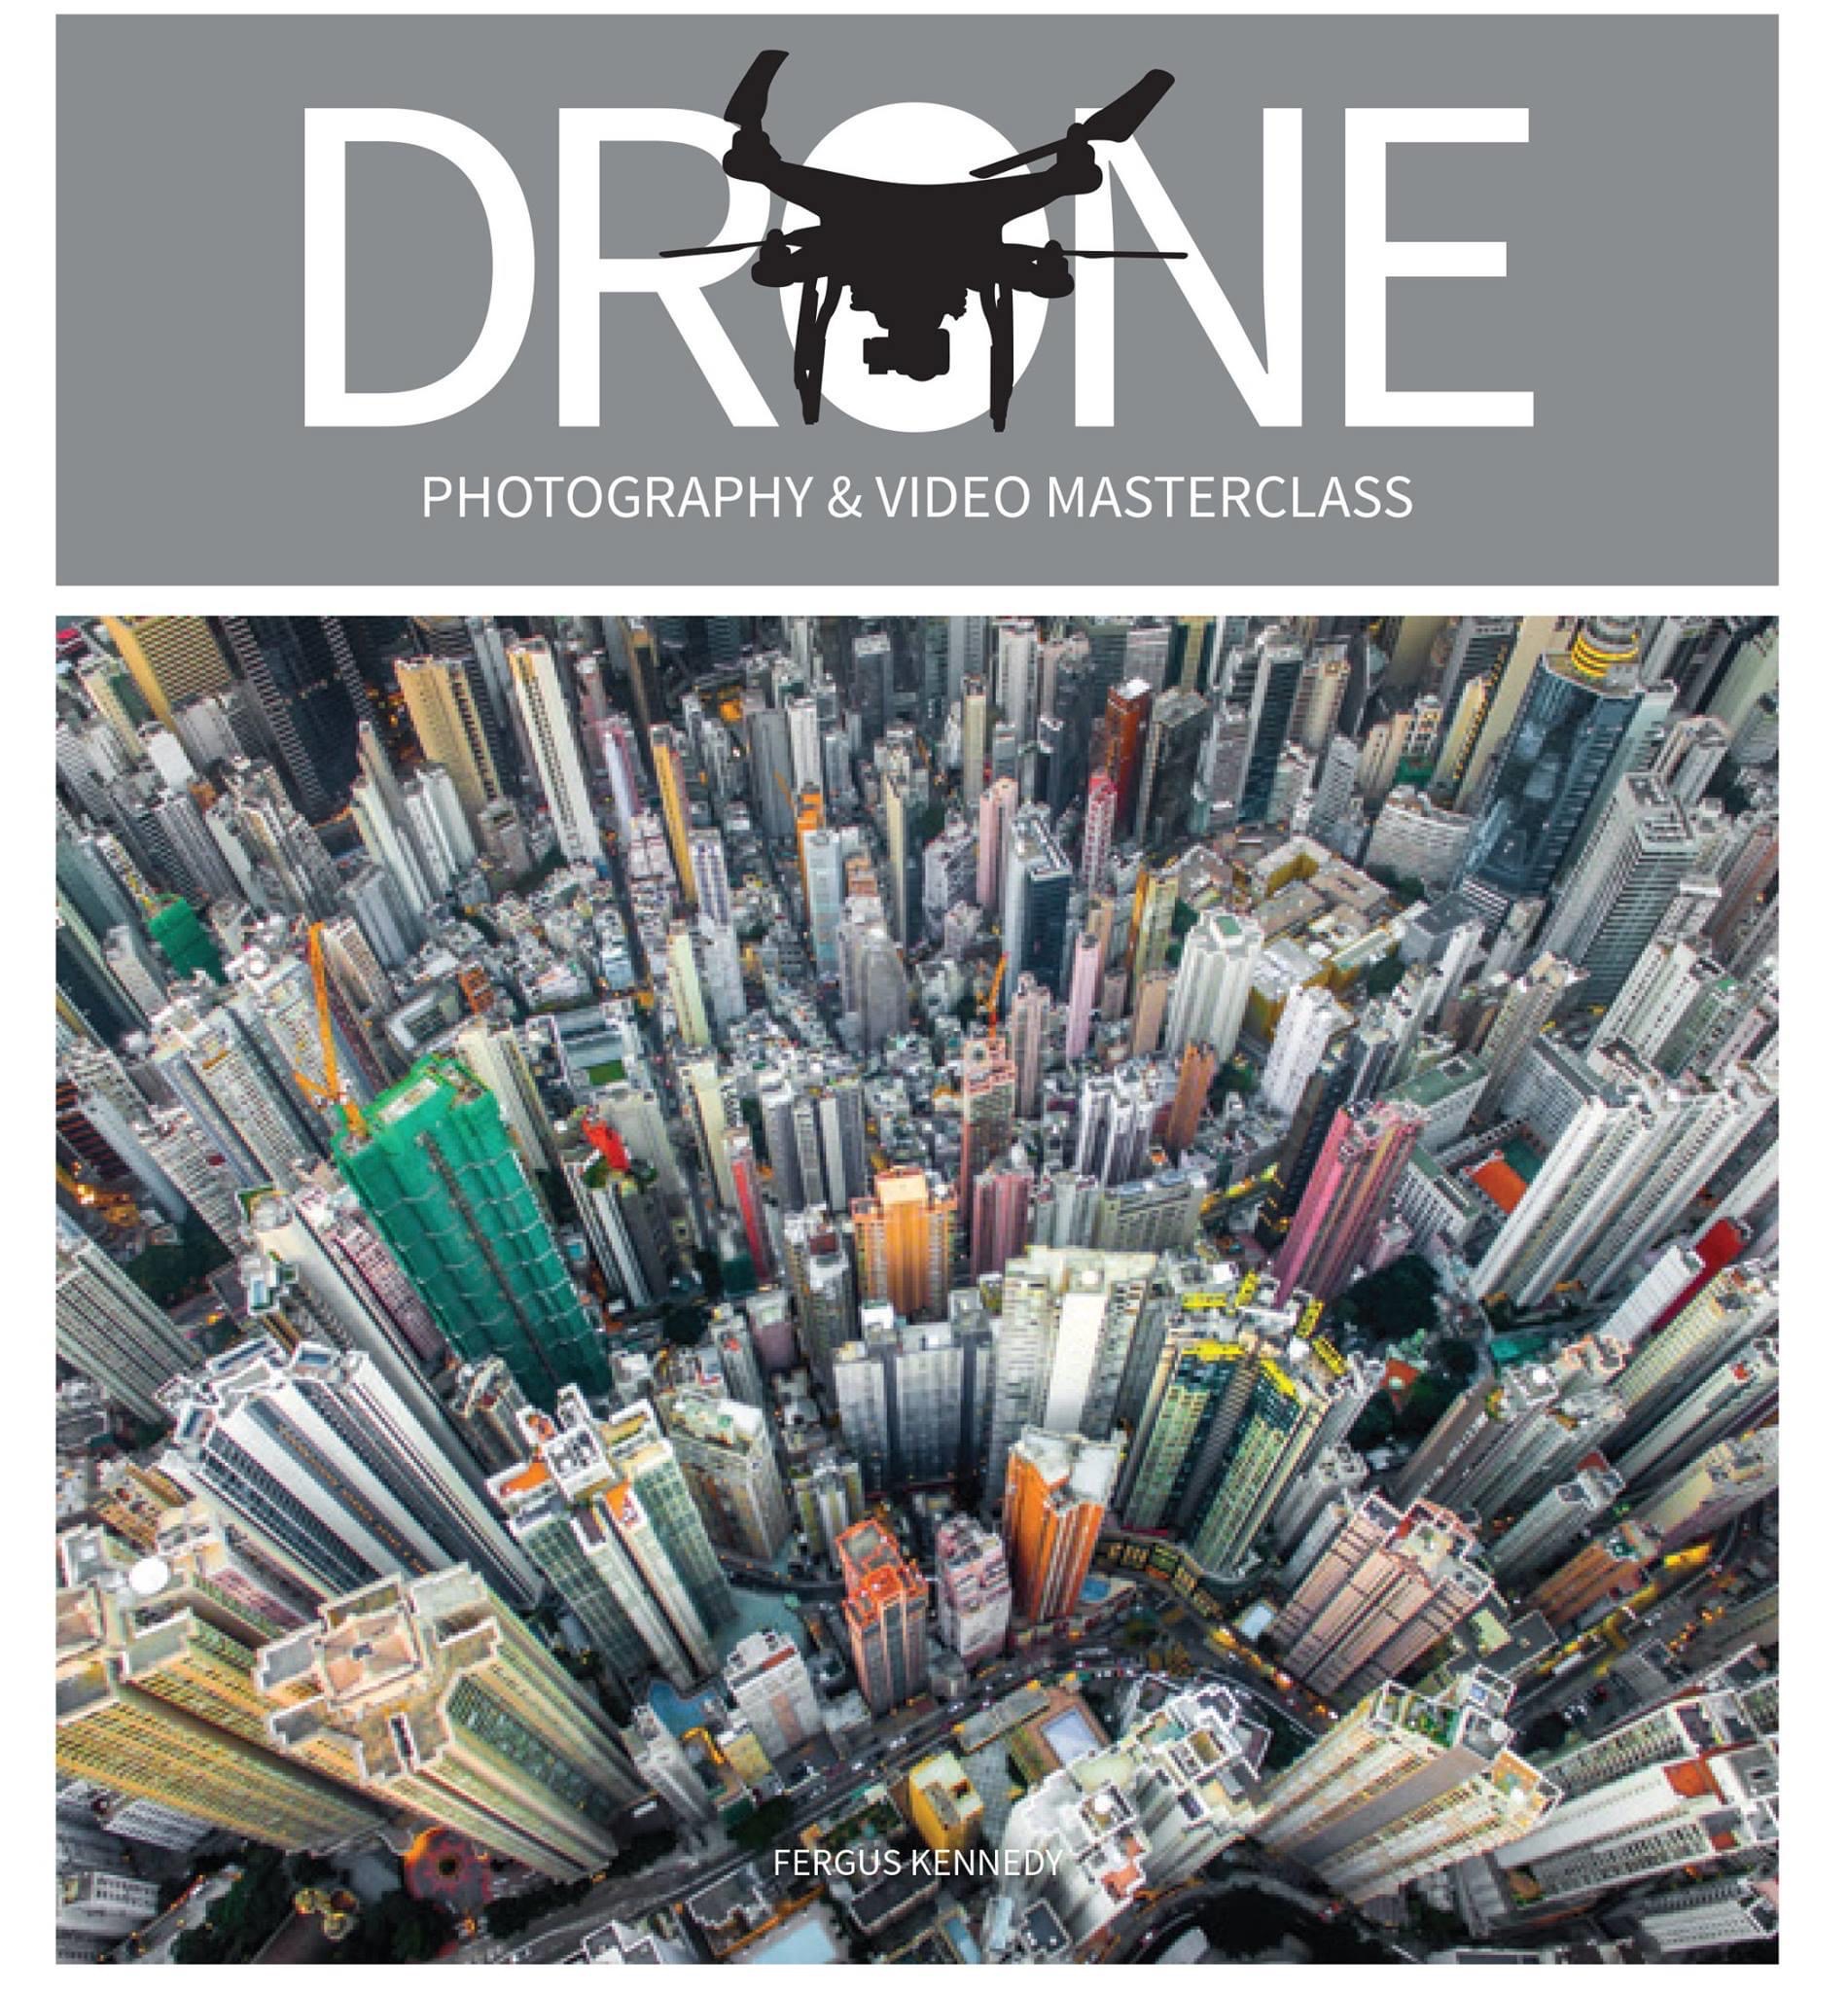 Cover of Drone magazine